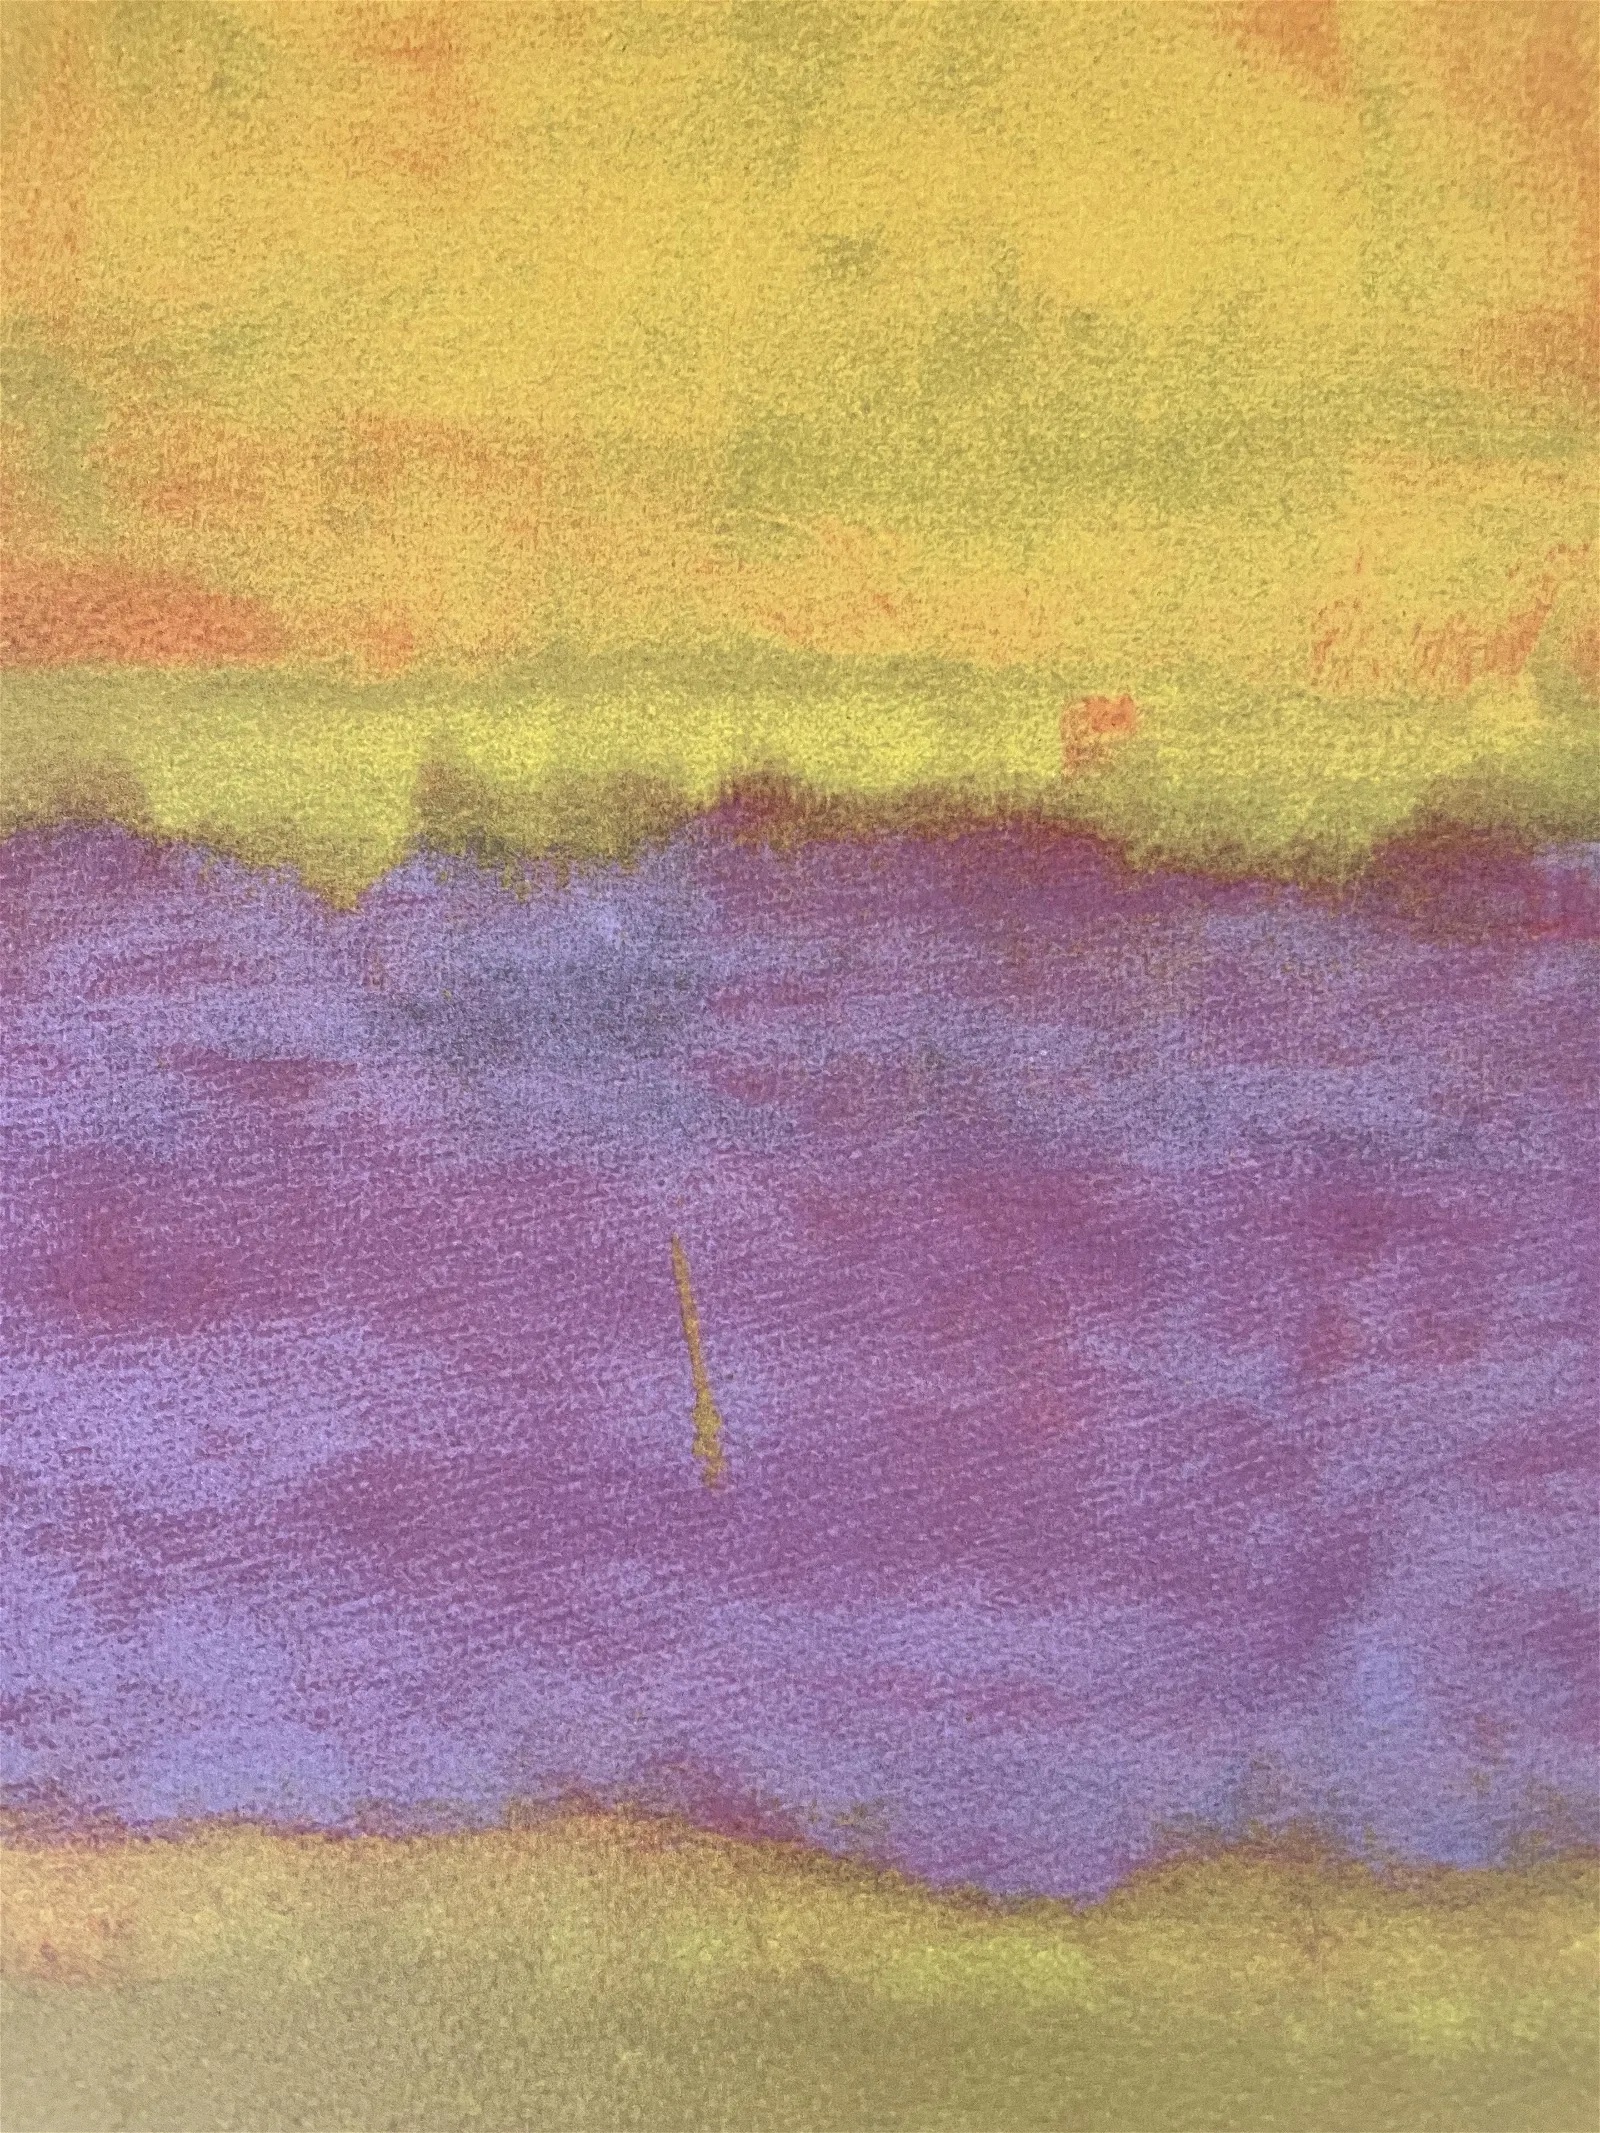 Mark Rothko "Untitled" Screenprint - Image 3 of 8